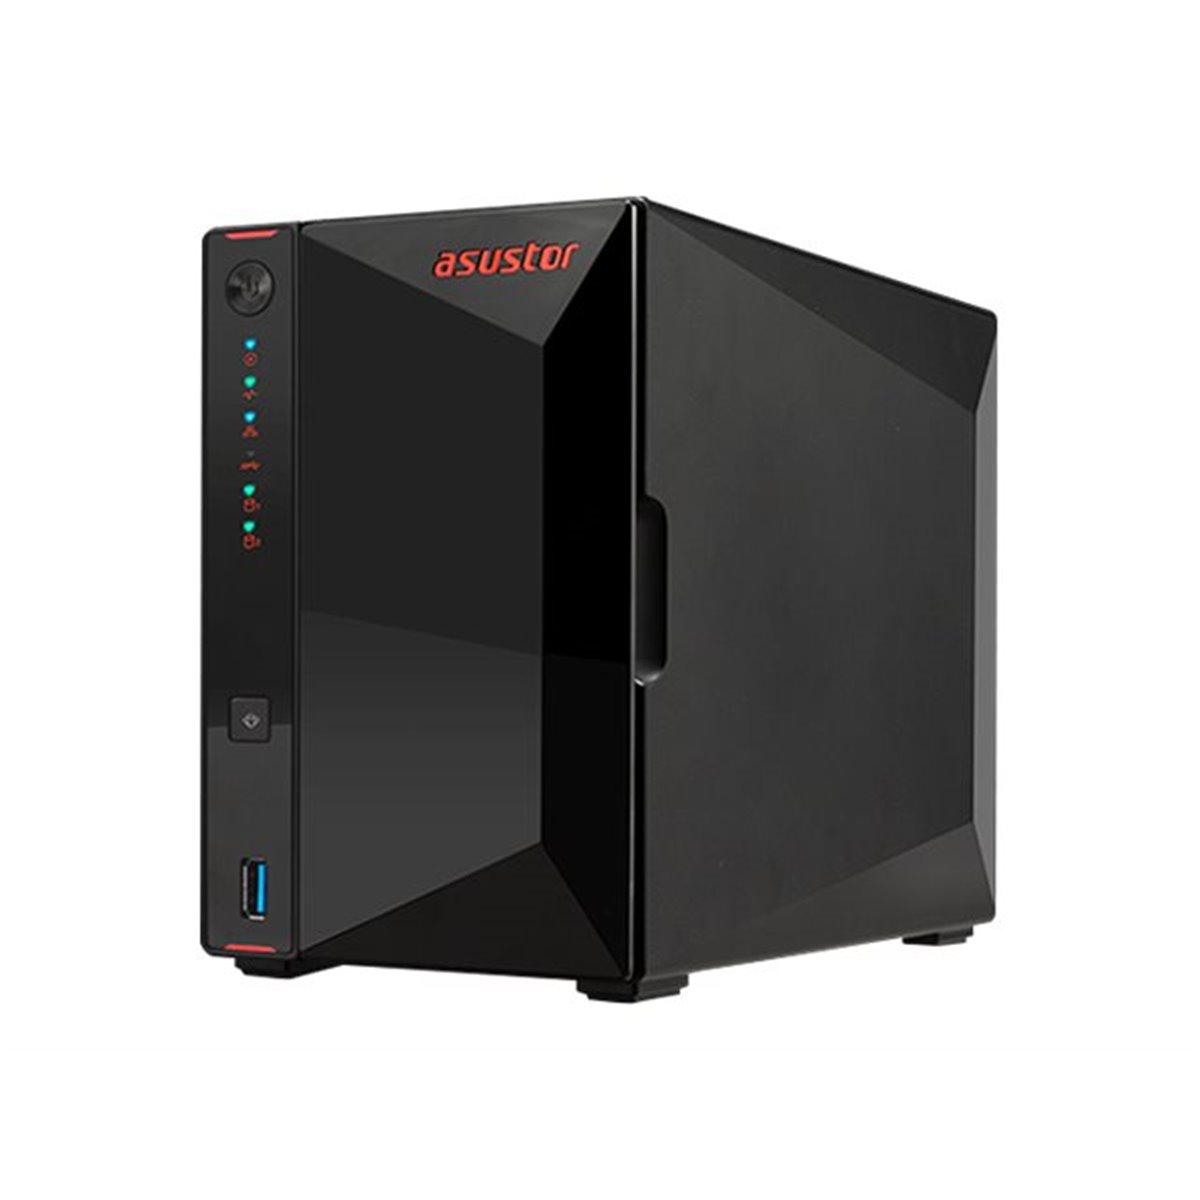 Asustor Nimbustor 2 AS5202T 2-Bay Desktop NAS (Network-Attached Storage) Enclosure